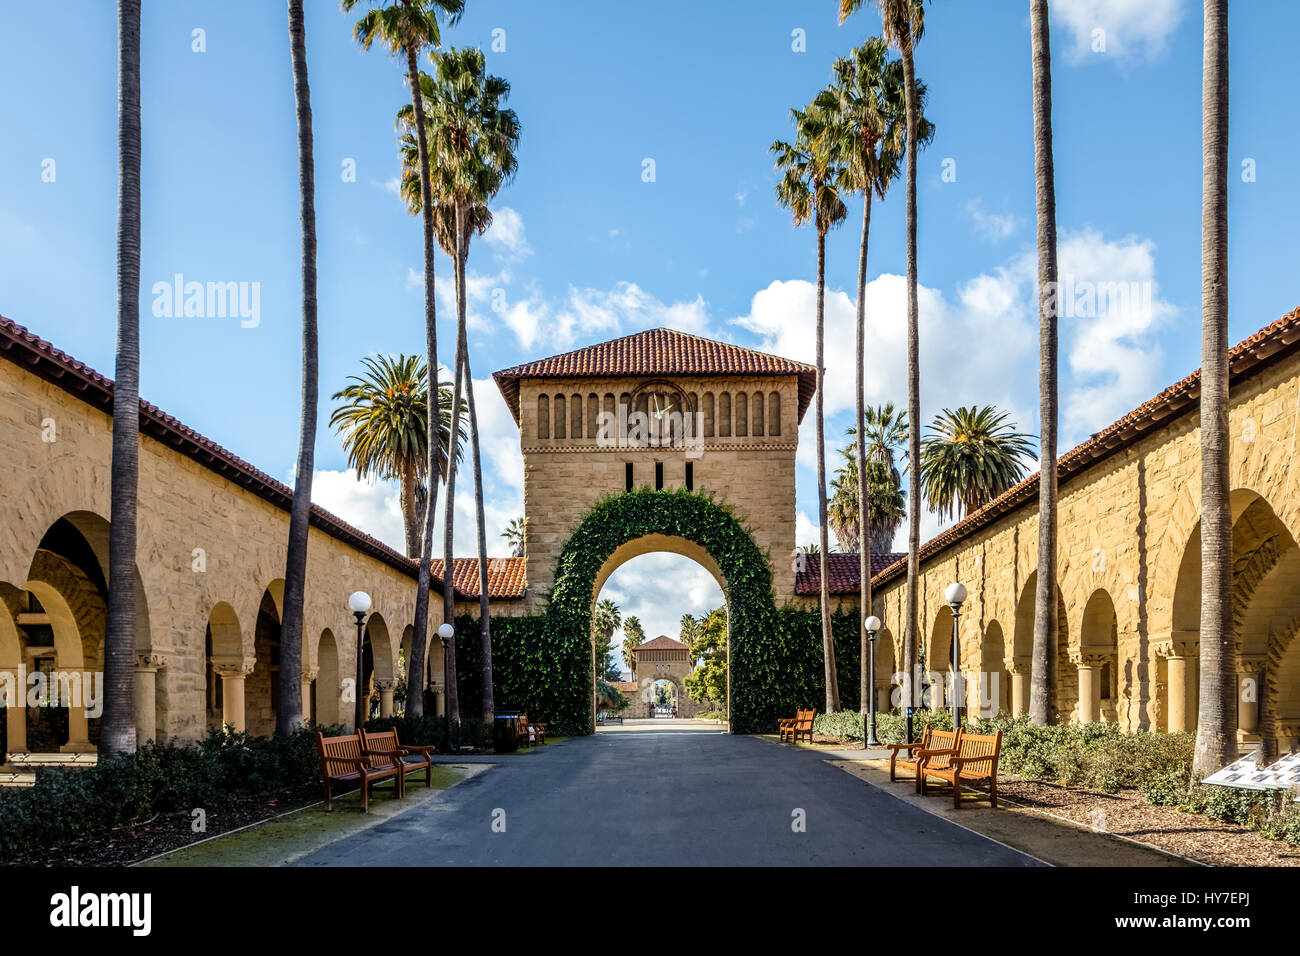 Gate to the Main Quad at Stanford University Campus - Palo Alto, California, USA Stock Photo